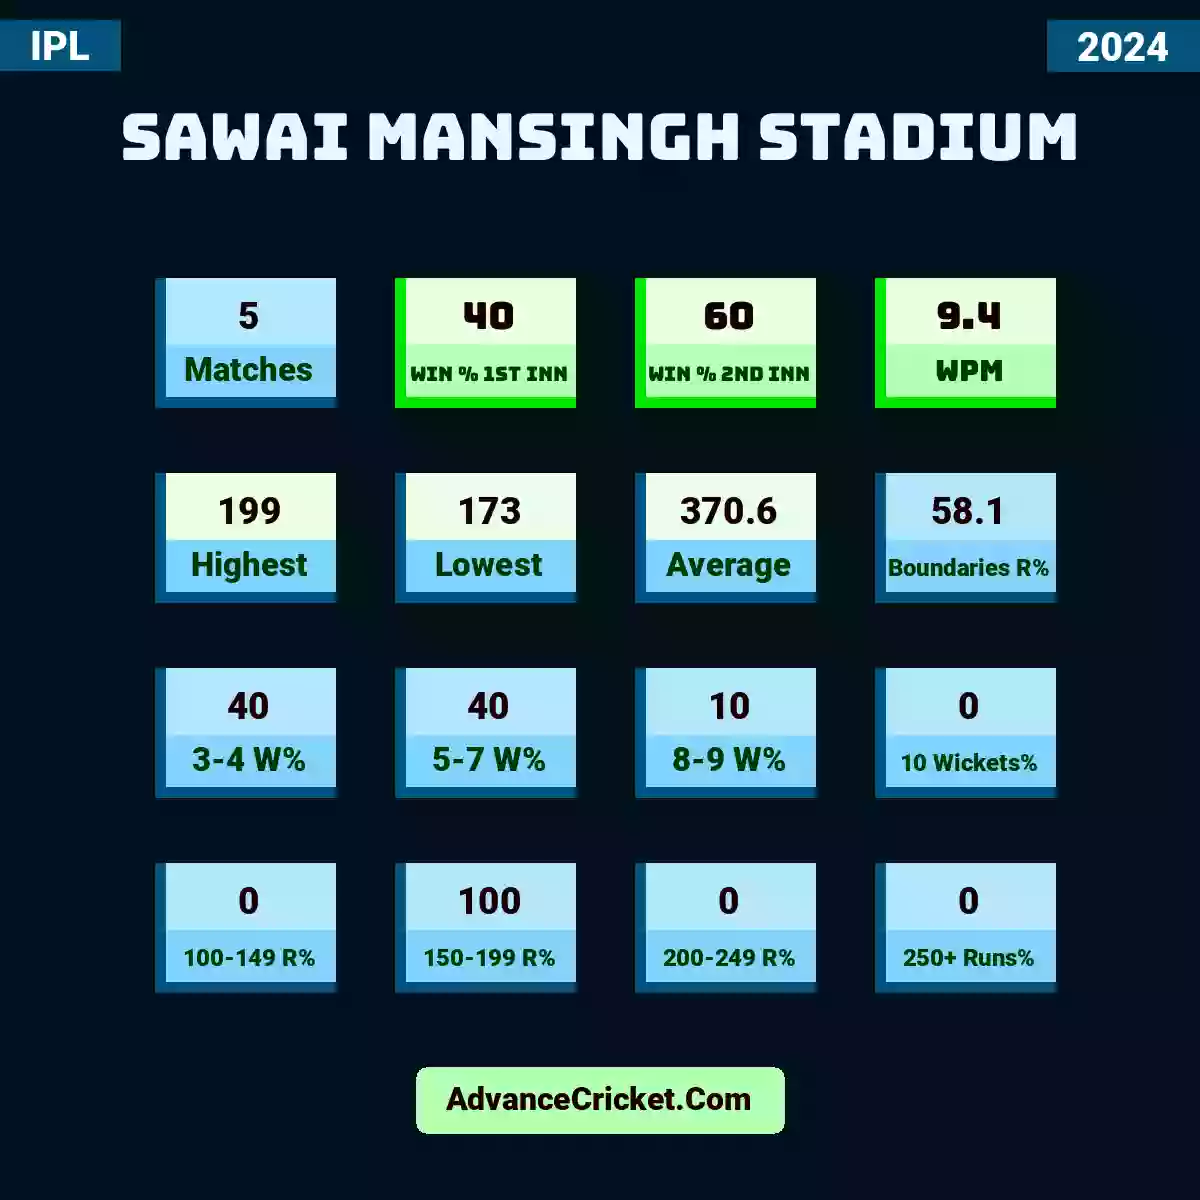 Image showing Sawai Mansingh Stadium IPL 2024 with Matches: 5, Win % 1st Inn: 40, Win % 2nd Inn: 60, WPM: 9.4, Highest: 199, Lowest: 173, Average: 370.6, Boundaries R%: 58.1, 3-4 W%: 40, 5-7 W%: 40, 8-9 W%: 10, 10 Wickets%: 0, 100-149 R%: 0, 150-199 R%: 100, 200-249 R%: 0, 250+ Runs%: 0.